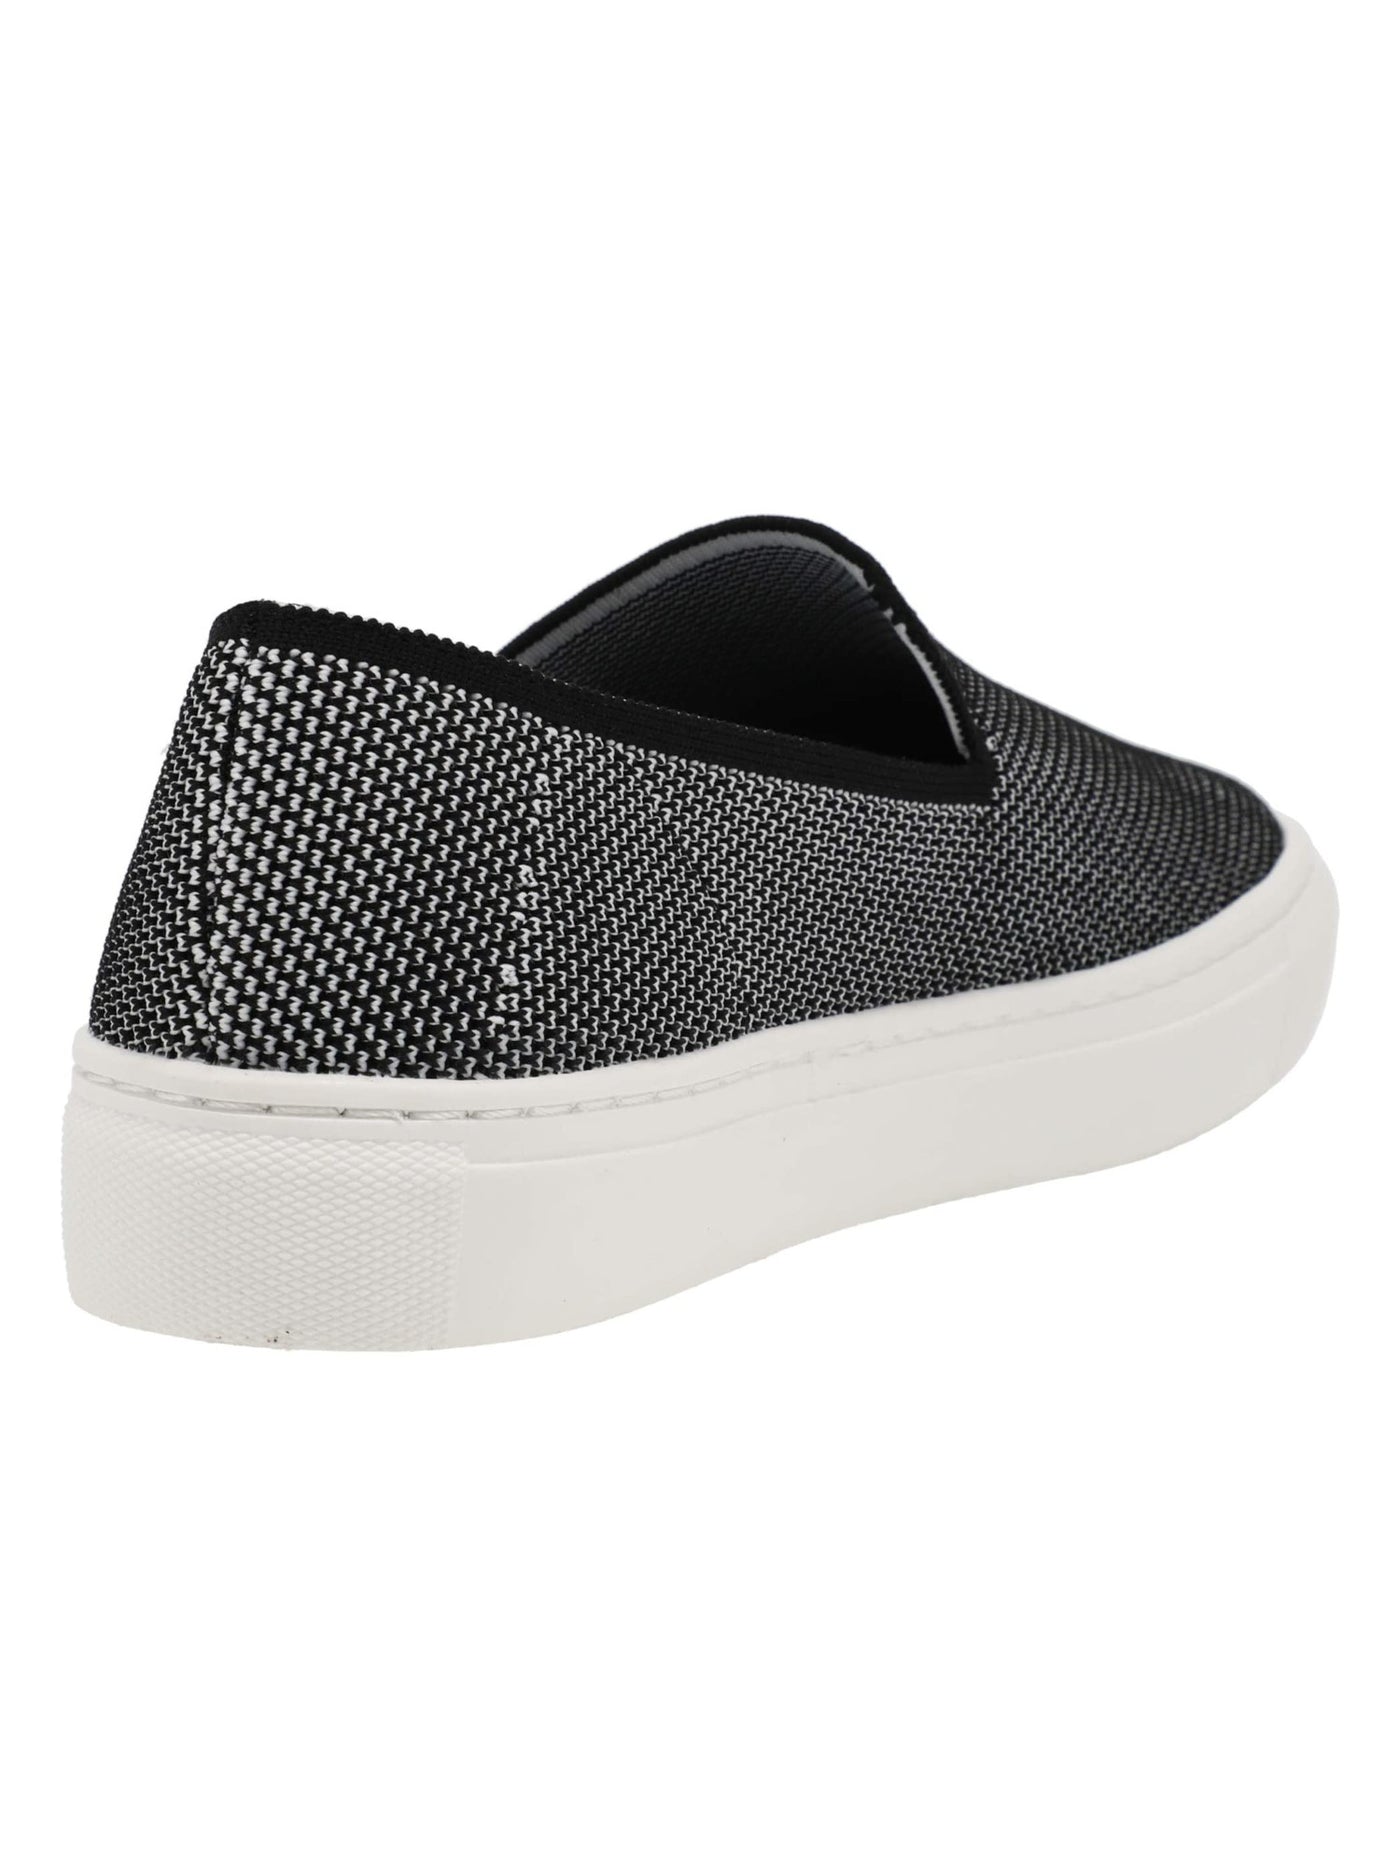 STEVEN Womens Black Patterned Cushioned Kraft Round Toe Platform Slip On Sneakers Shoes 7.5 M